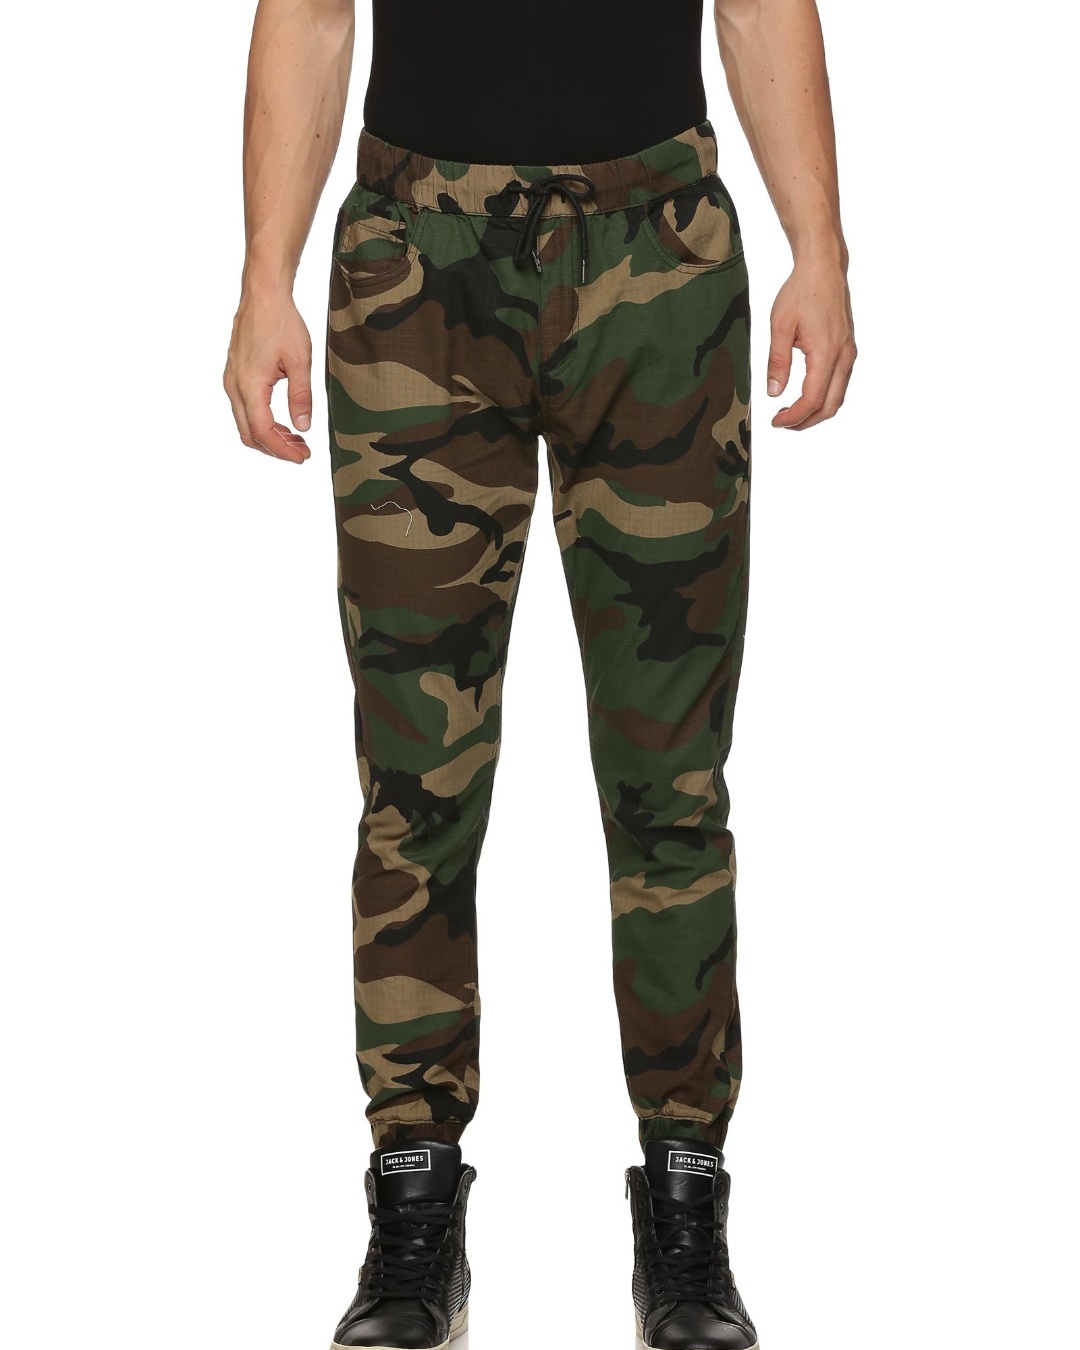 Buy Men's Green Camouflage Printed Slim Fit Joggers Online at Bewakoof